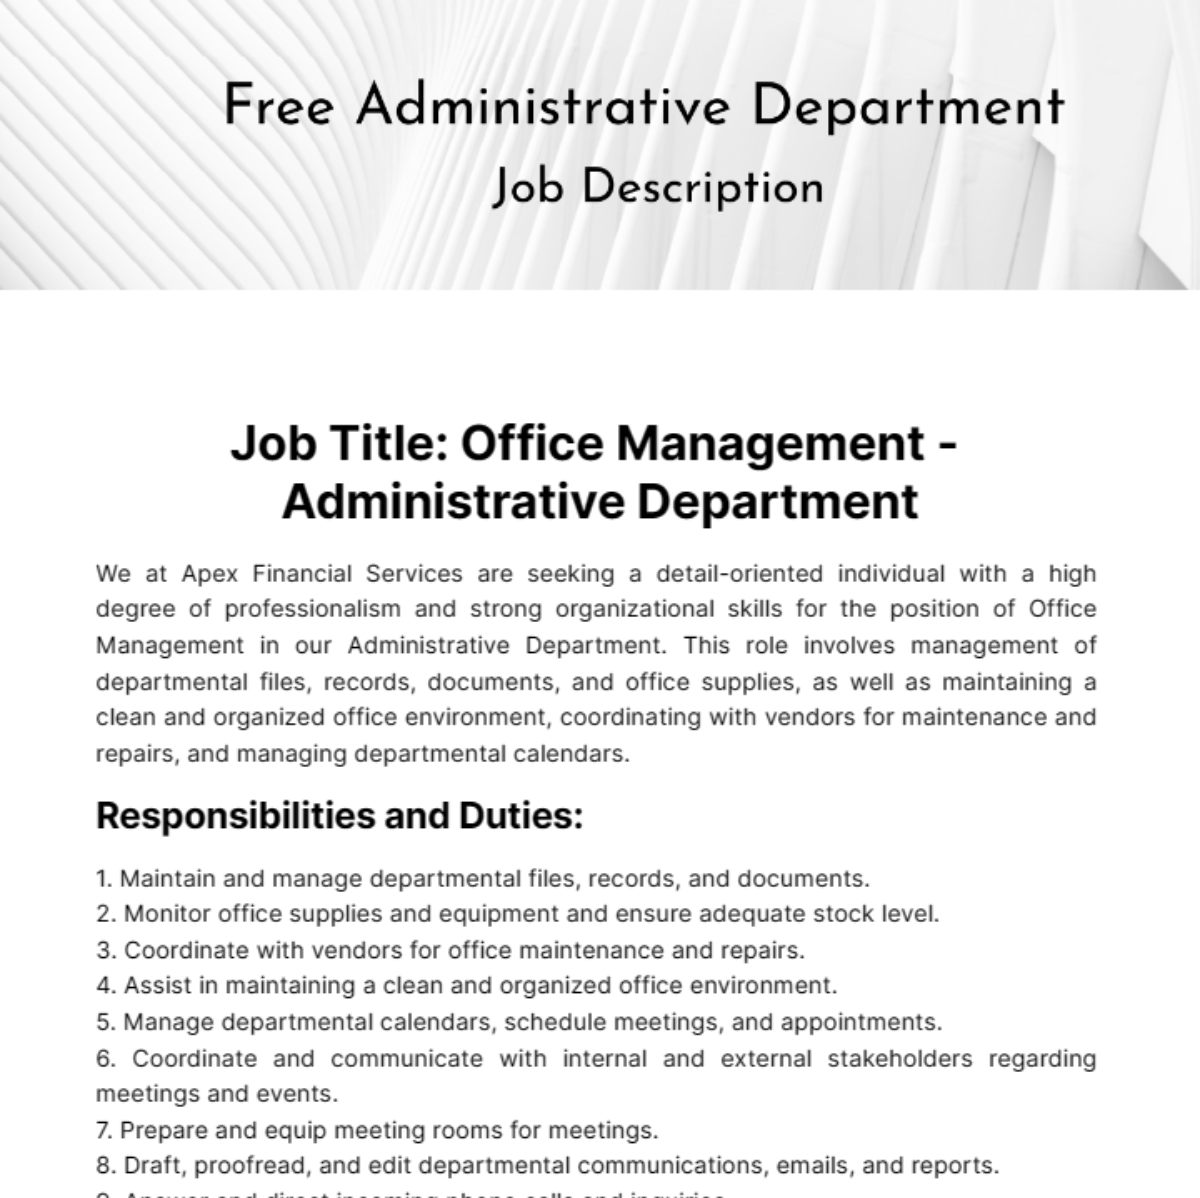 Free Administrative Department Job Description Template